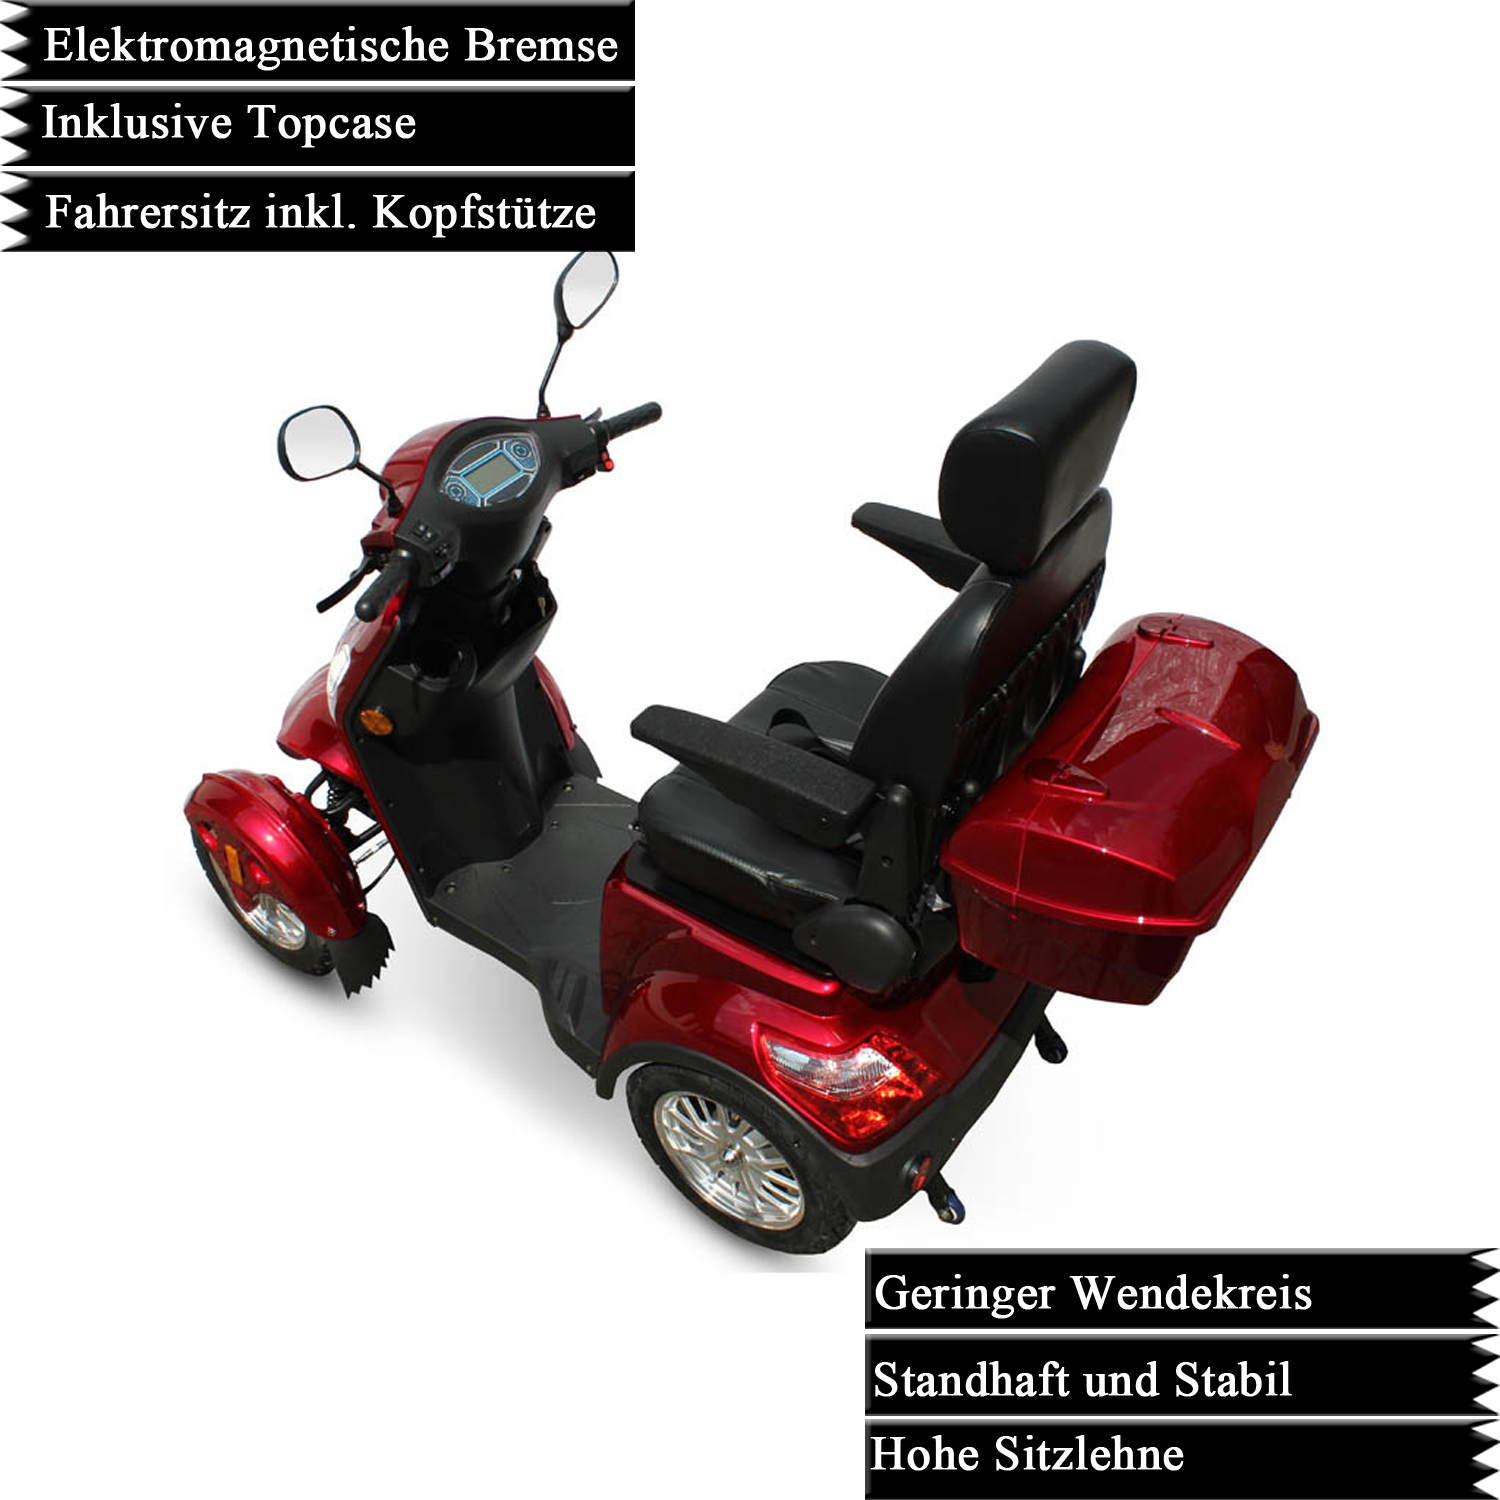 ECO 4 ENGEL elektromagnetischer mit Bremse E-Scooter 520 Elektromobil Seniorenmobil Rot Räder